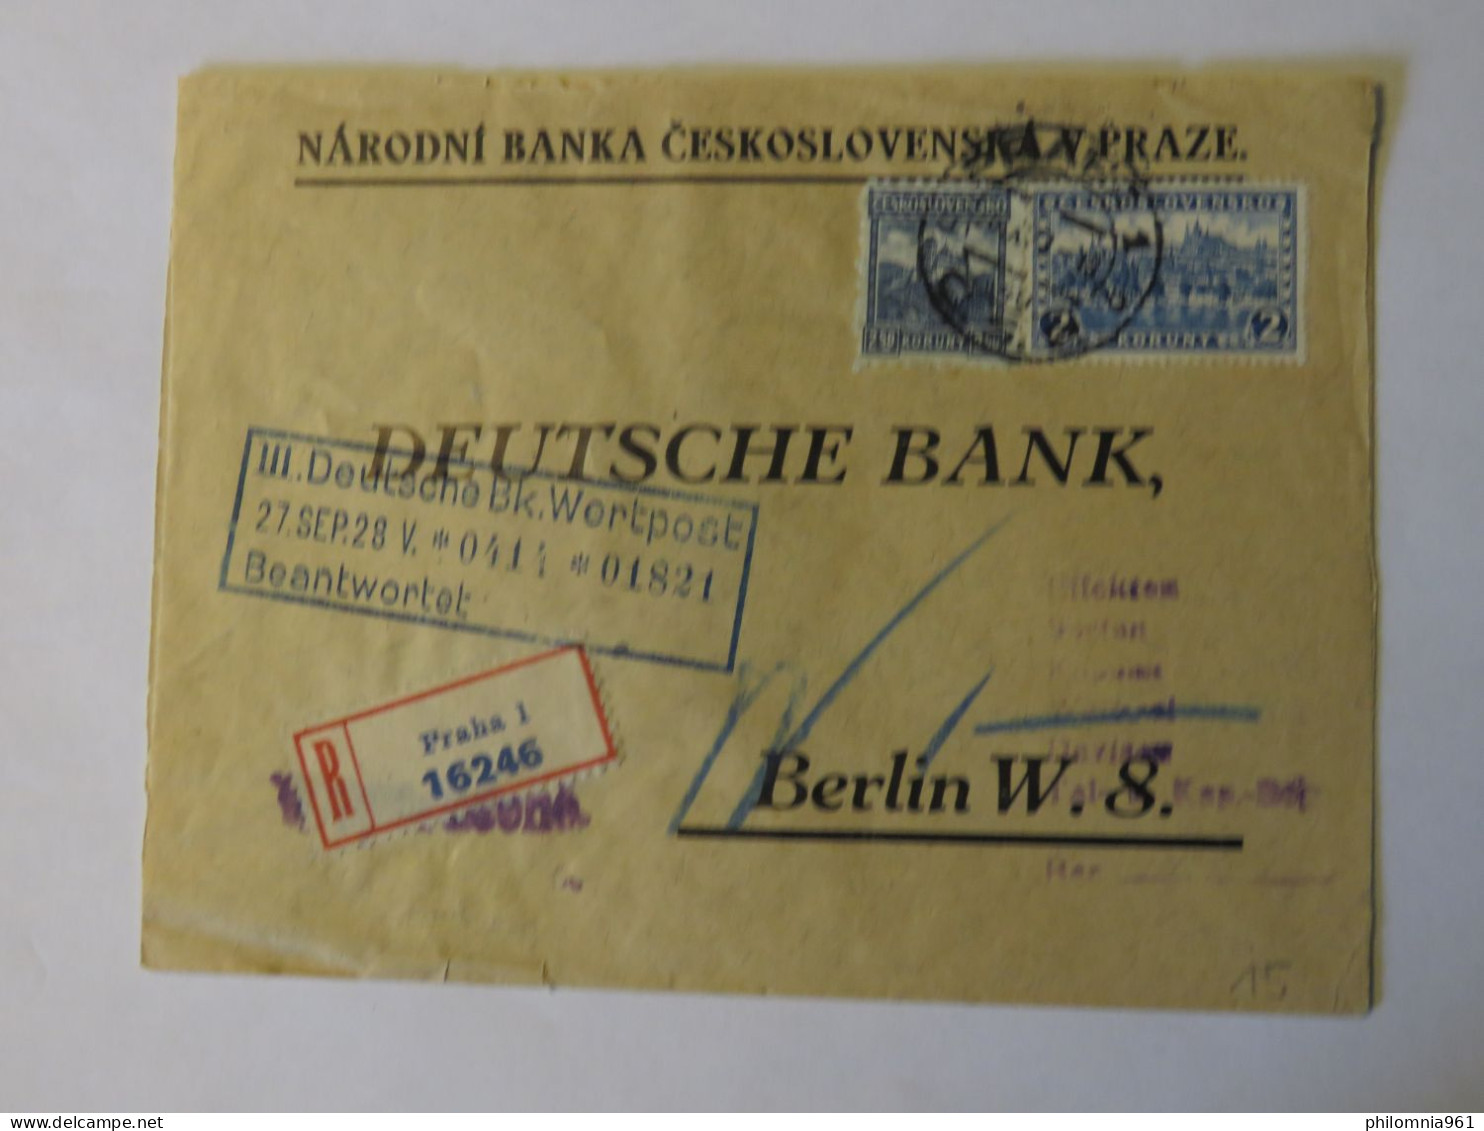 CZECHOSLOVAKIA REGISTERED COVER TO GERMANY 1928 - Usados